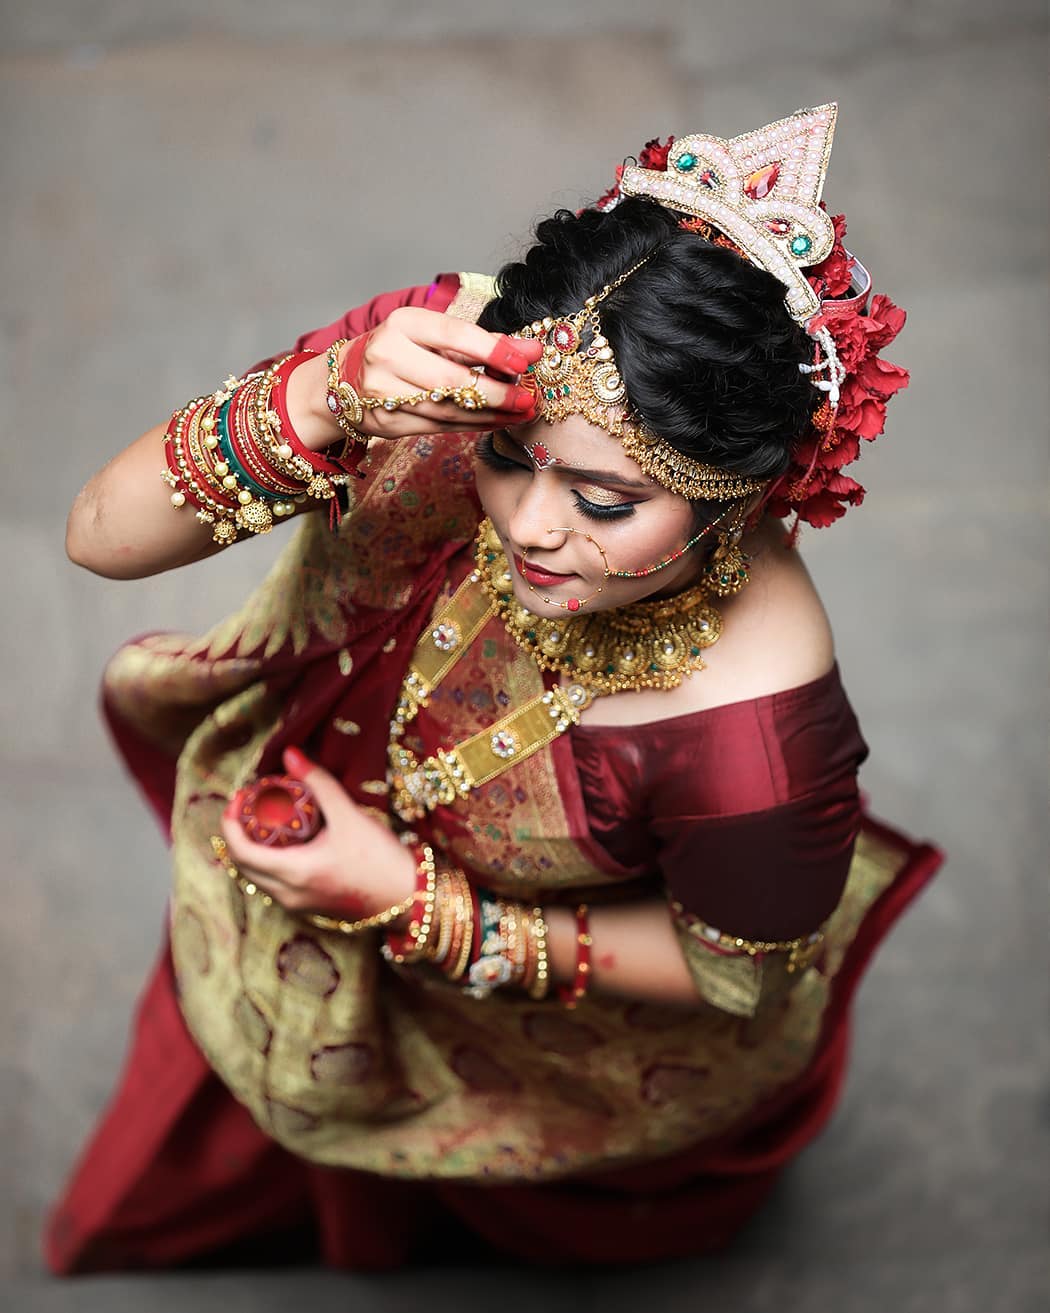 Bengali bride shoot.. MUA : @dishabeautysaloonacademynikol
In frame : Meera
Shoot by : @dip_memento_photography
.
.
#portraits #dslrofficial #indianphotographers 
#portraitsindia #canon #colorsofindia
#photosofindia 
#fashion
#photographersofindia
#portraitsindia #fashionblogger #dipmementophotography
#makeupartist #photography #portraitvision #portraitmood #indianportraits #colorsofindia #portraitphotography #ahmedabad #indianpictures 
#portraitmood #portraits_india #bokehphotography #bongportrait #bokehphotography #yesindia 
@ig_calcutta @all_about_kolkata123
@kolkatasutra
@kolkataportraits 
@kolkataportraitphotographer
@stories_from_lens 
@kolkatas_paparazzi
@globe_portraits
@ig_biswajit 
@portvisual
@bong_crush_ 
@bong.divas 
@_bong.queen_
@bong_fashion_bloggers
@bong_princess
@bong_angles
@beauty_of_bengal
@bong_bomb
@bongoporichoy
@indian_fashion_bloggers
#bongportrait #bongcrush_official
@bestportraitsindia